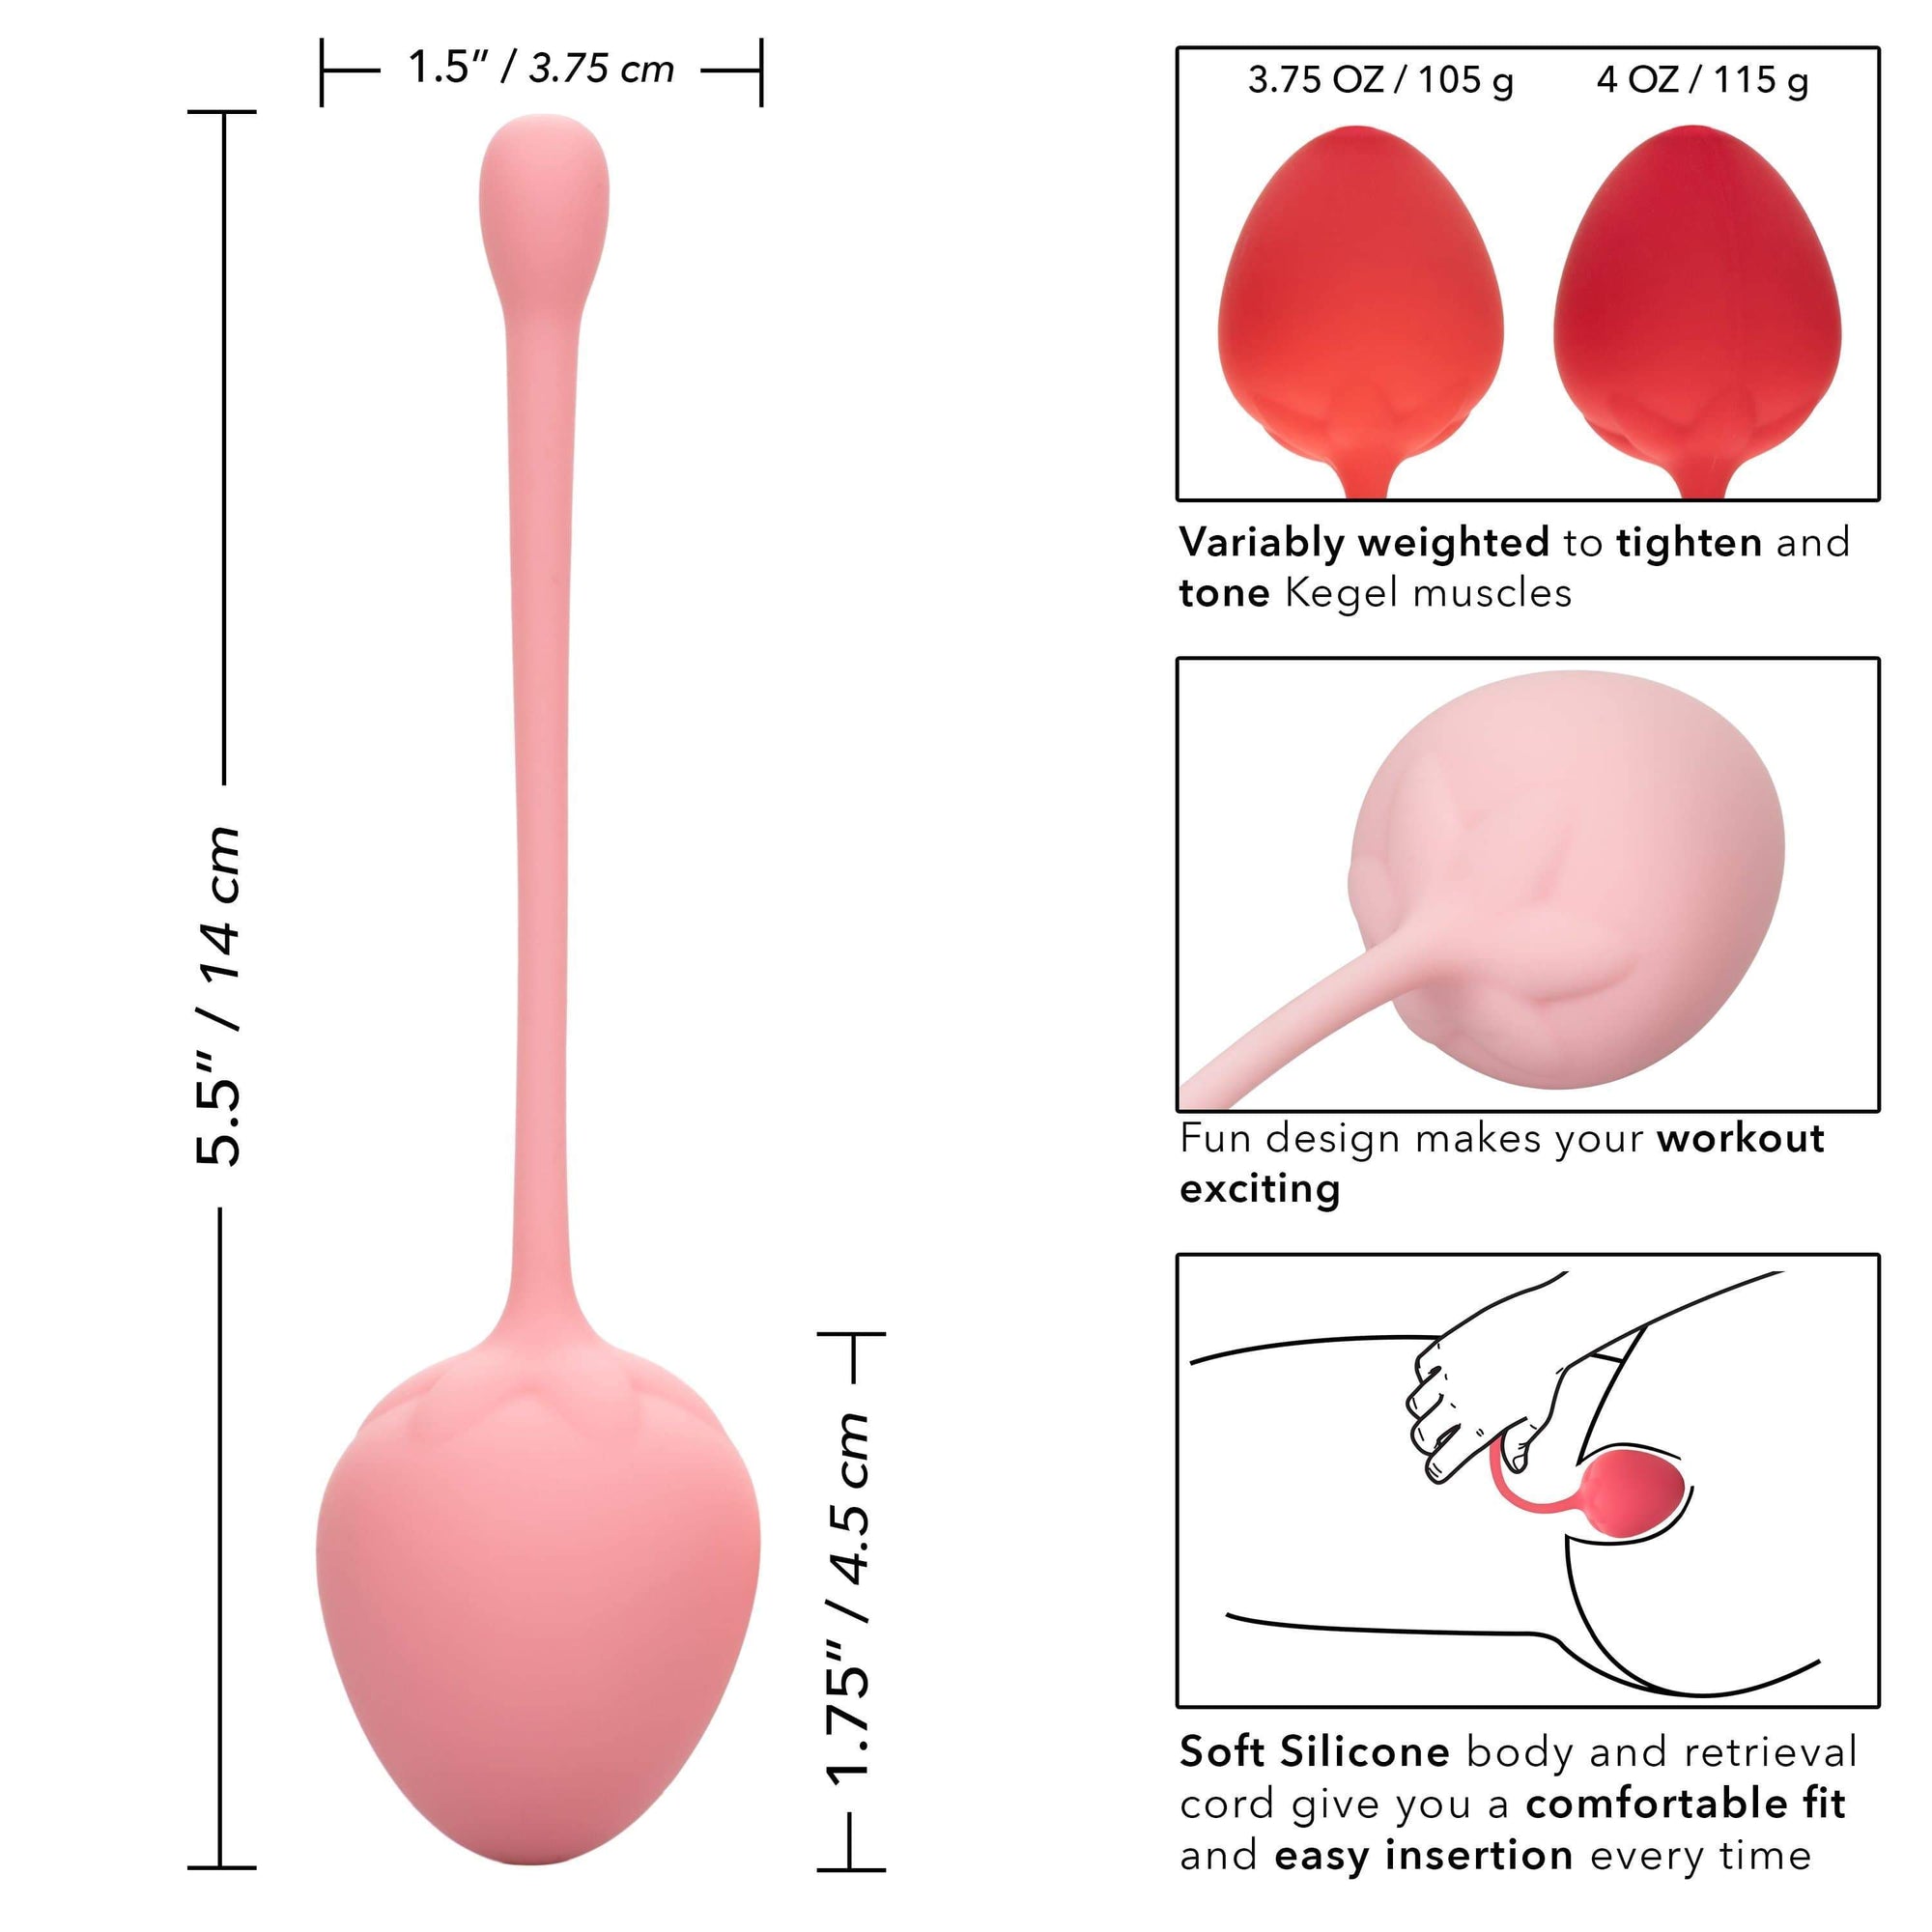 California Exotics - Strawberry Silicone Kegel Balls Training Set (Pink) Kegel Balls (Non Vibration) 716770092427 CherryAffairs